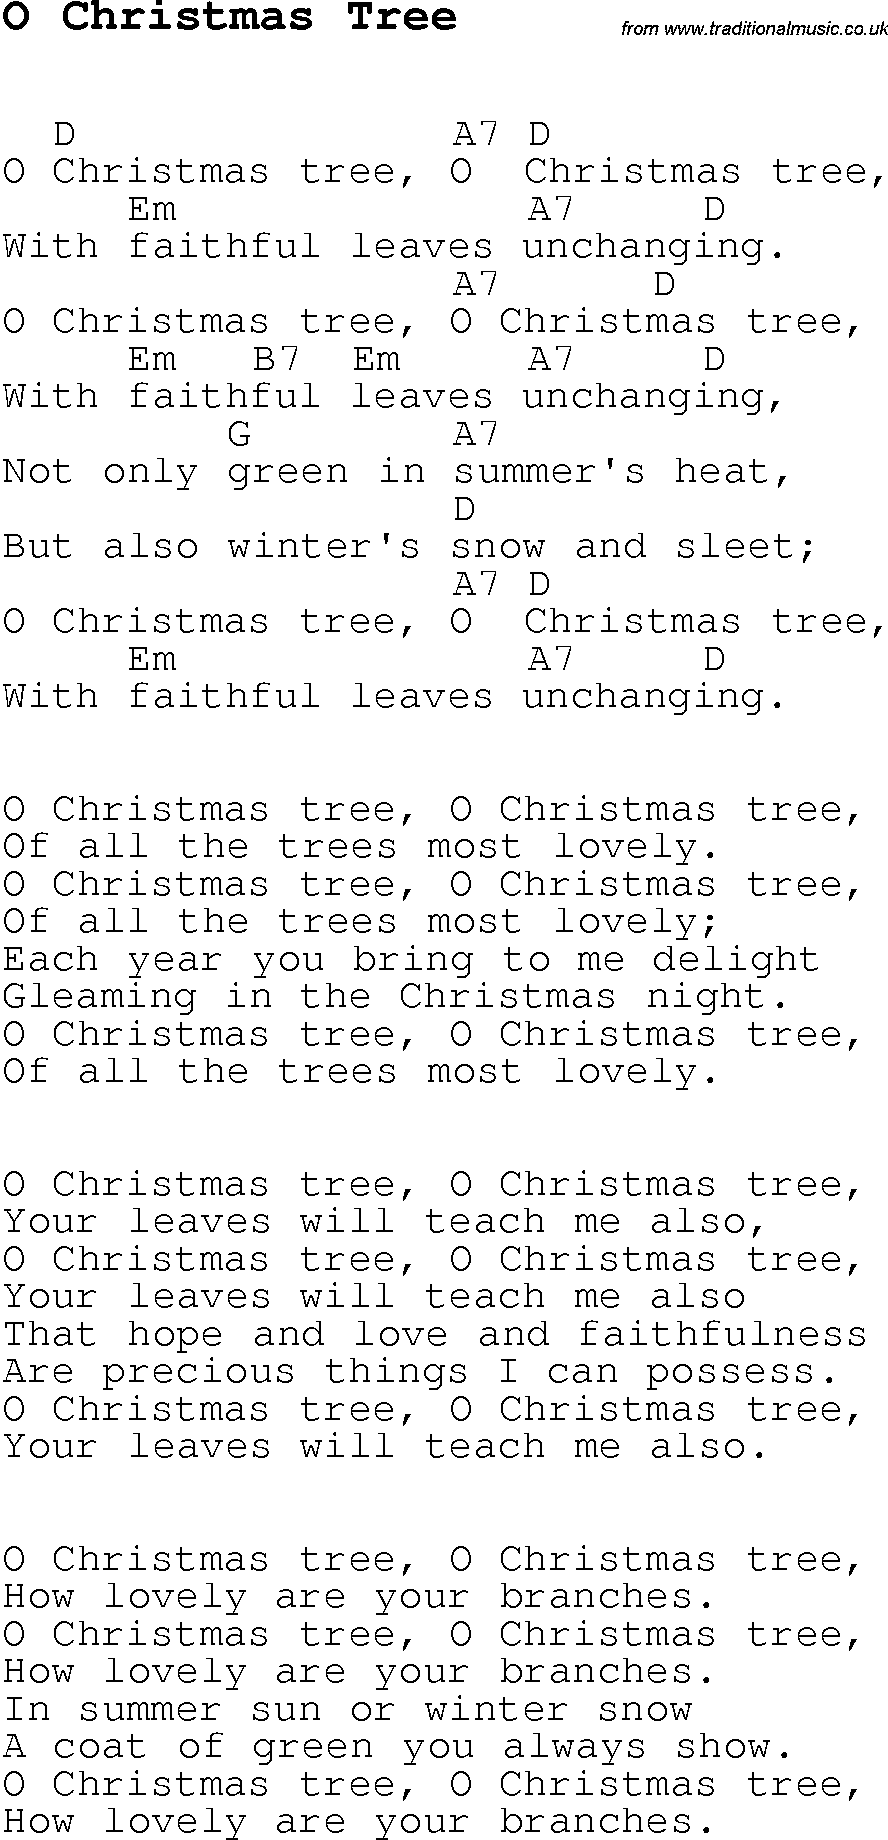 Christmas Songs and Carols, lyrics with chords for guitar banjo for O Christmas Tree